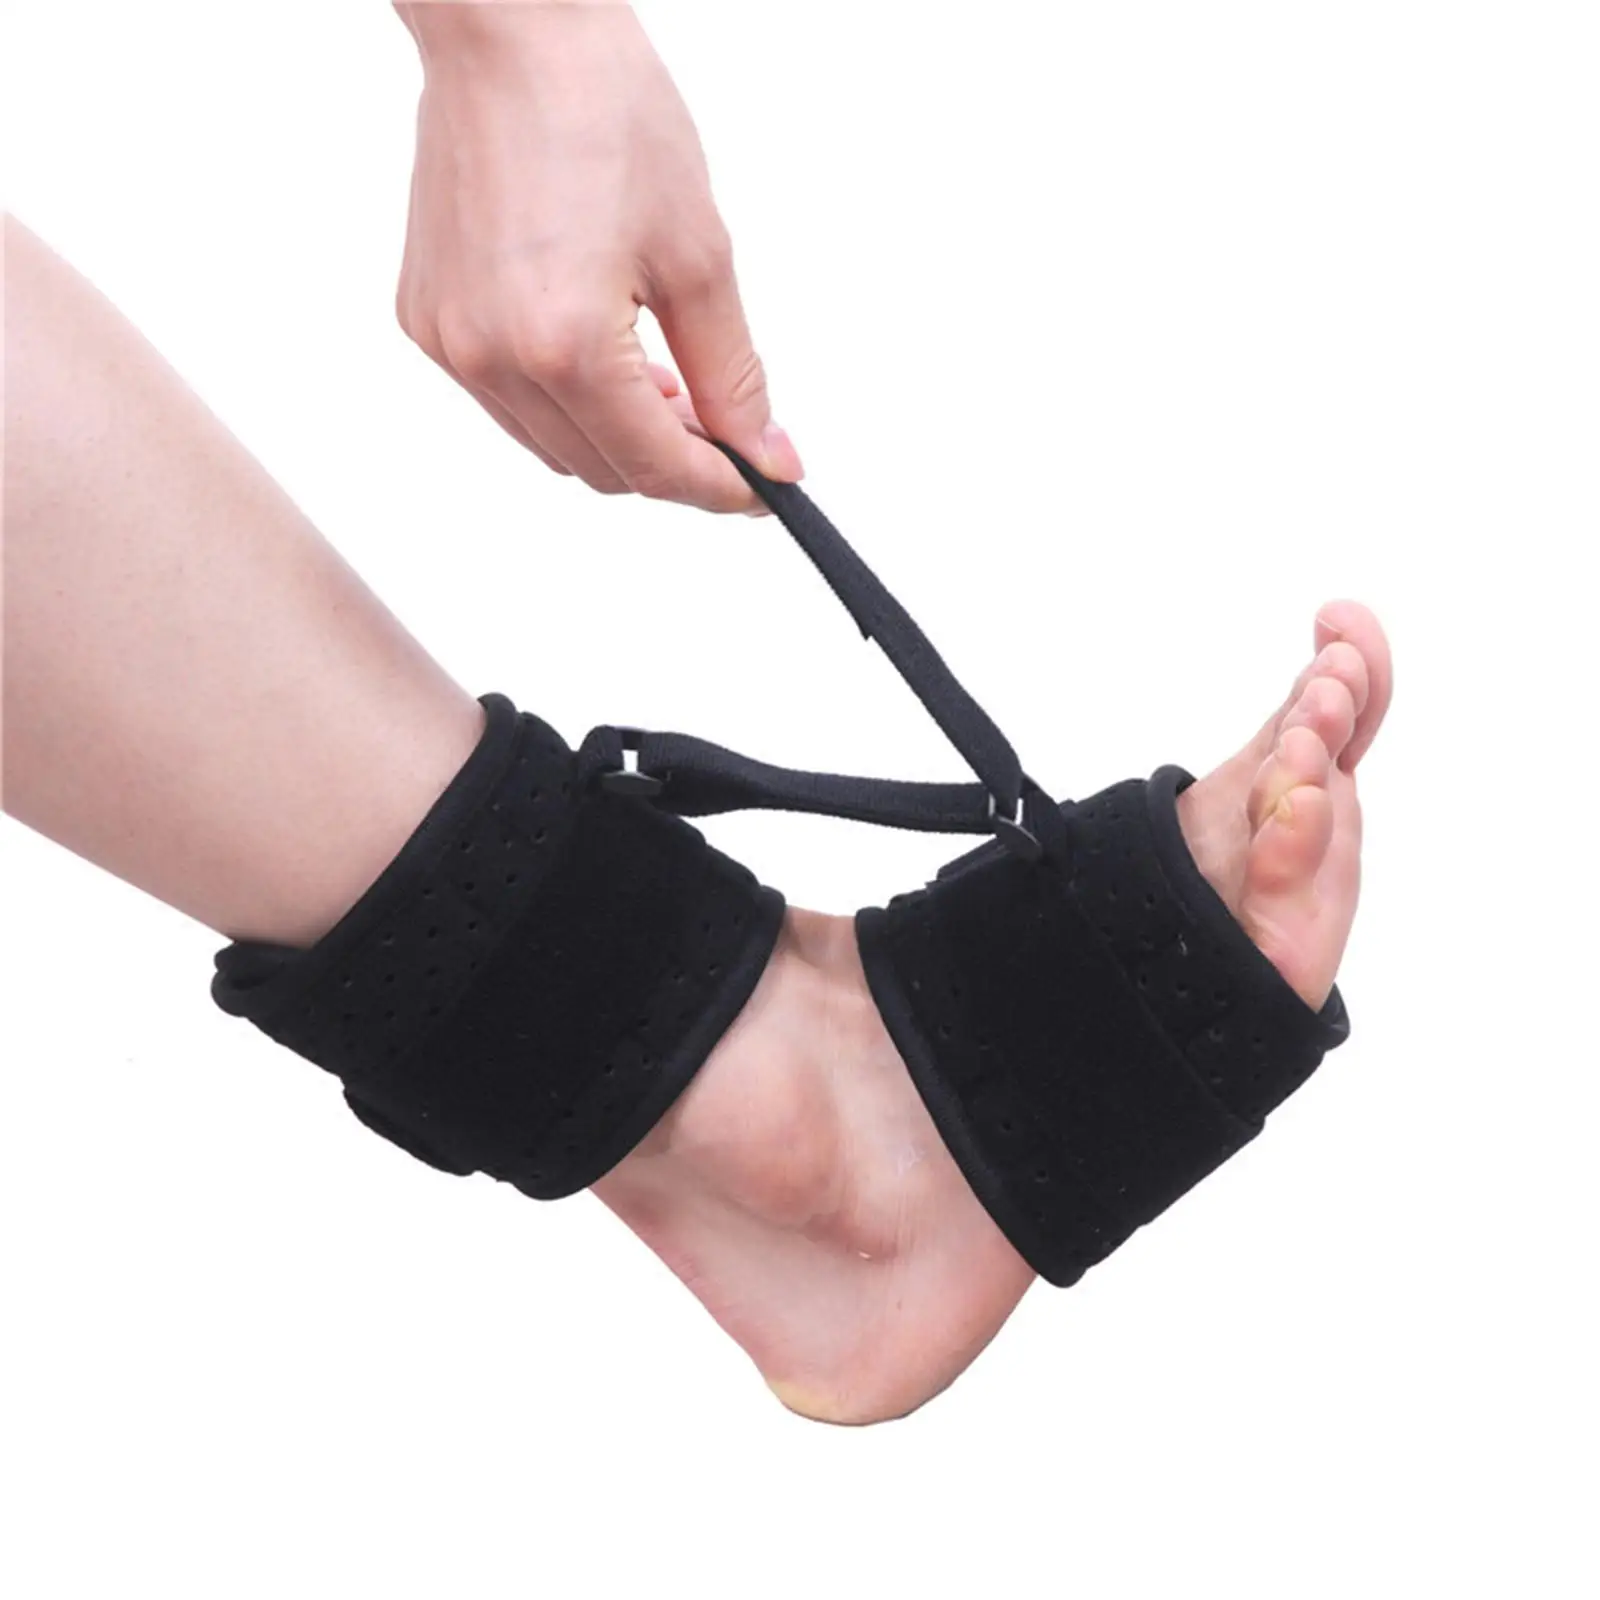 Dorsal Night Splint for Plantar Fasciitis for Heel, Ankle, Arch Foot Pain Adjustable Dorsiflexion Strap